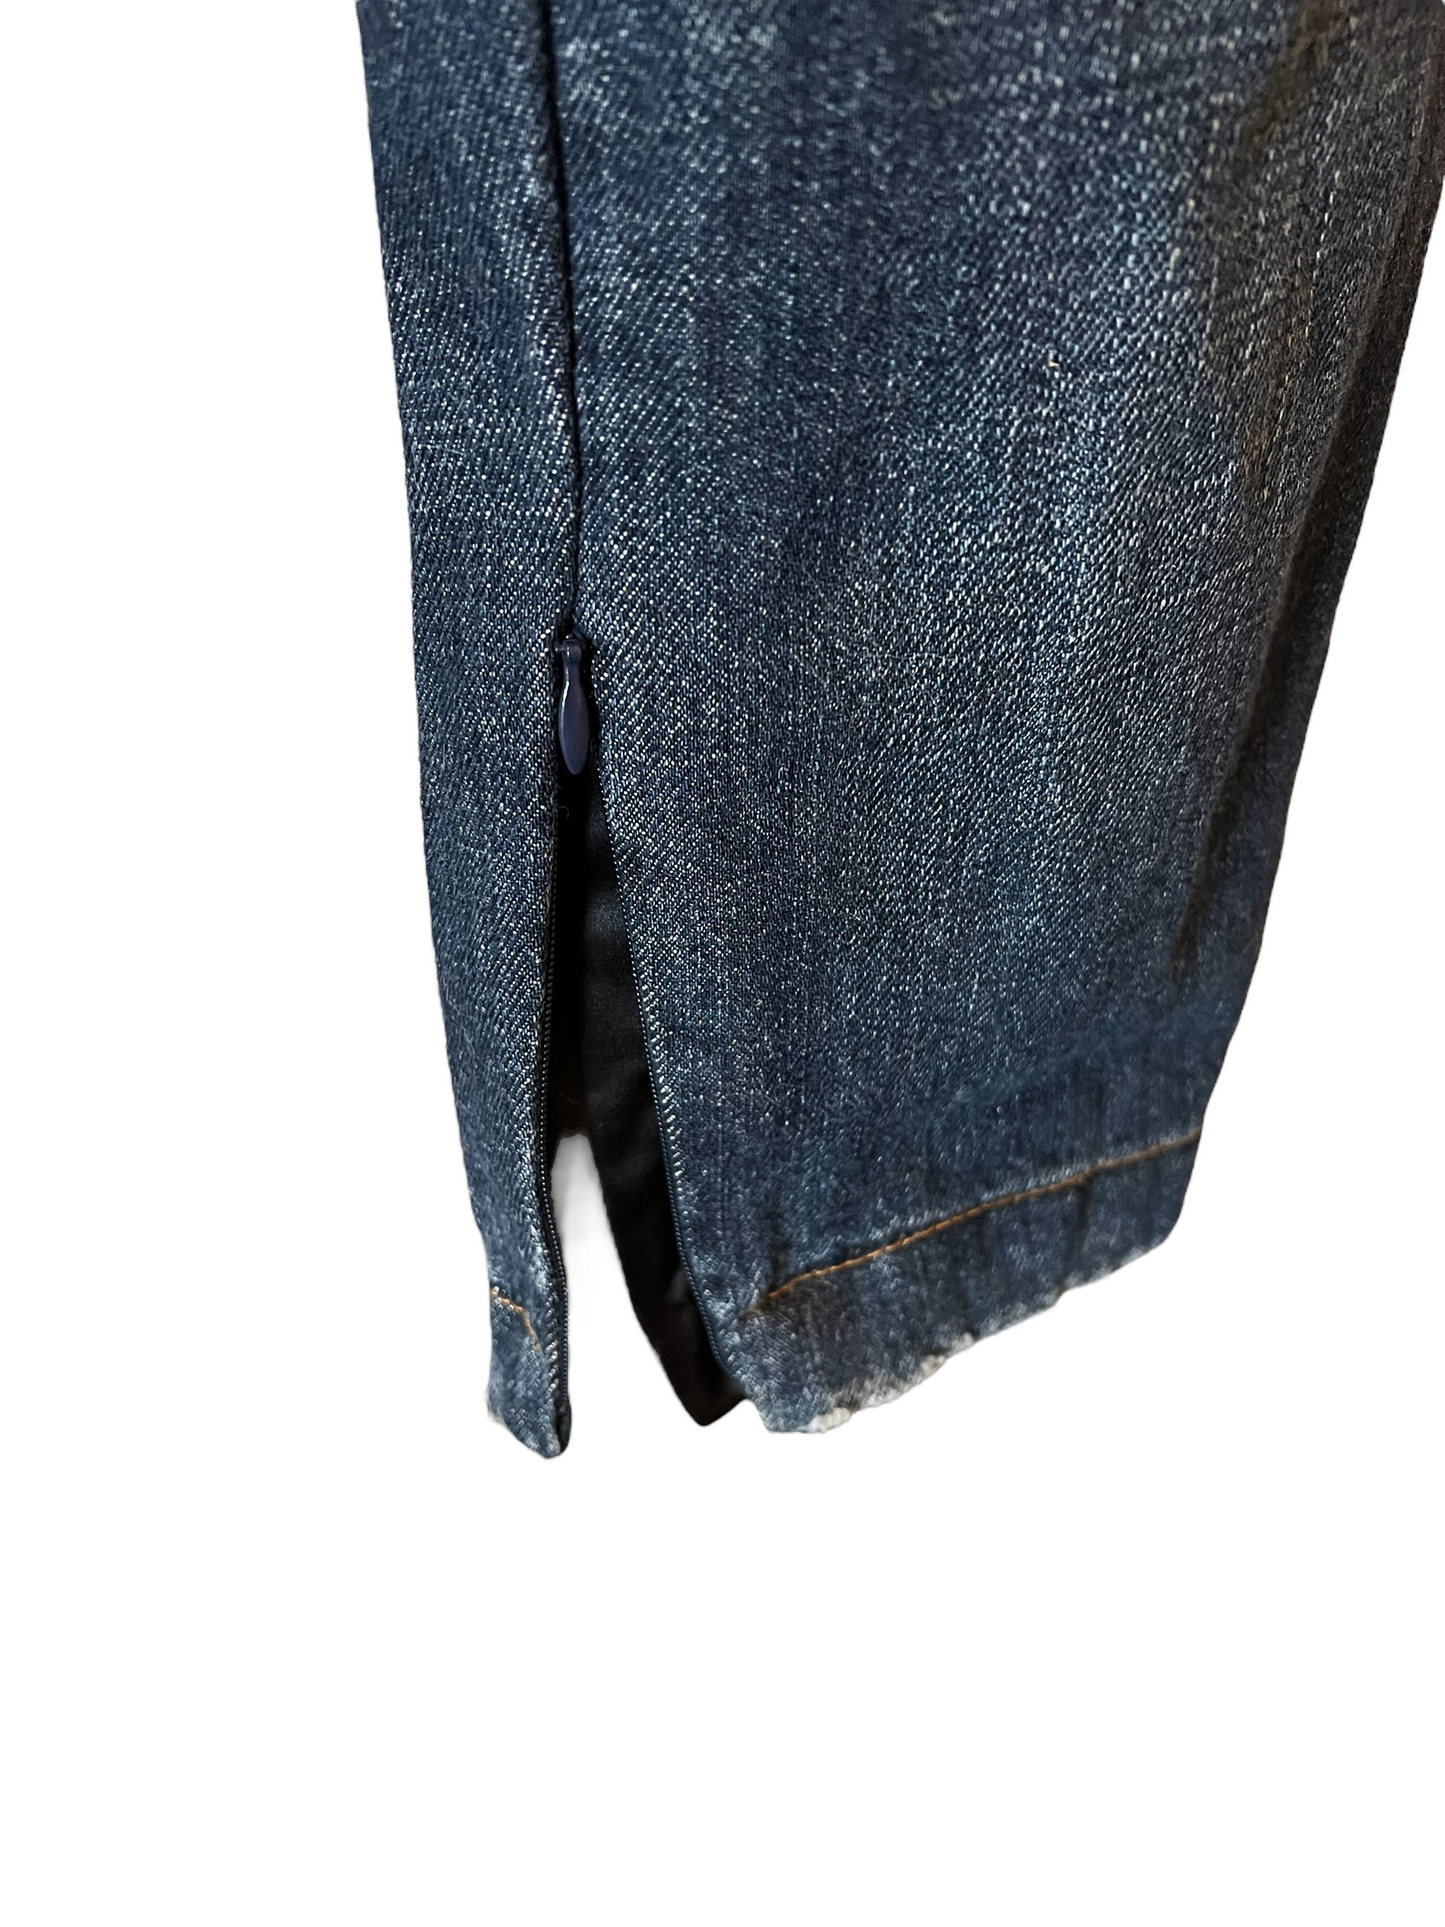 Dolce & Gabbana Distressed Grosgrain Size 46 Jeans